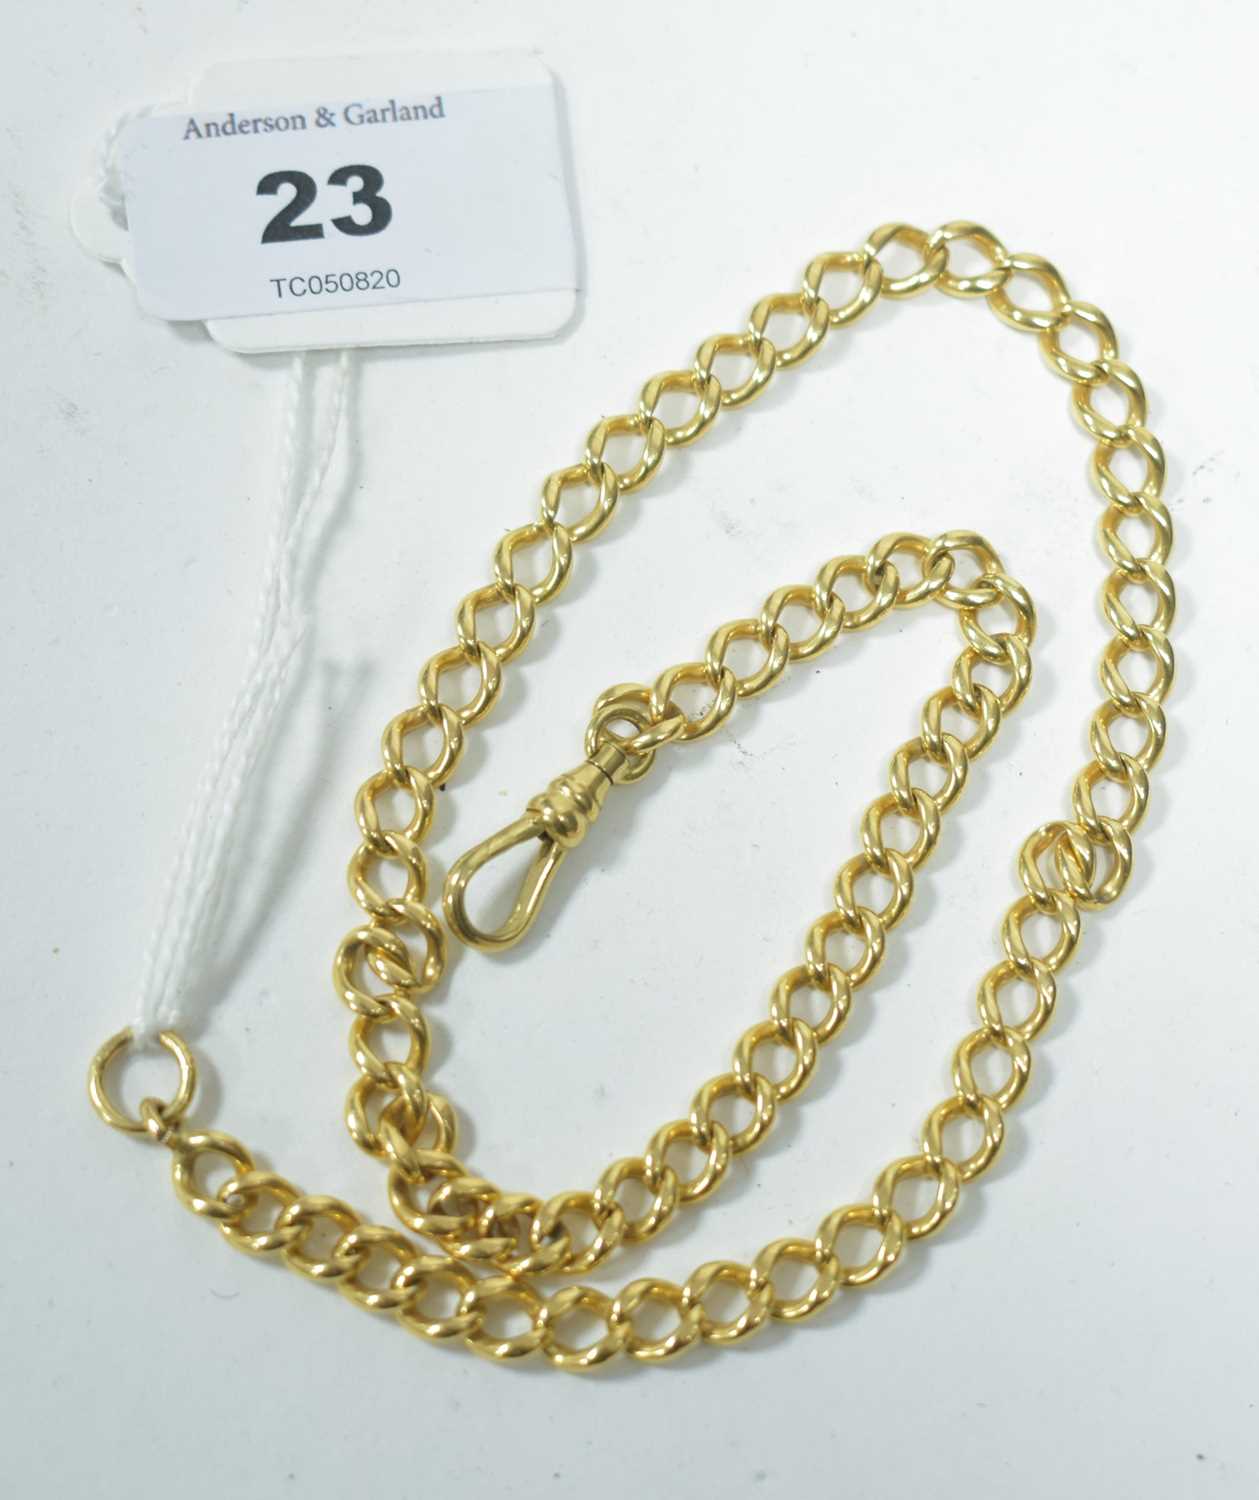 Lot 23 - Yellow metal watch chain